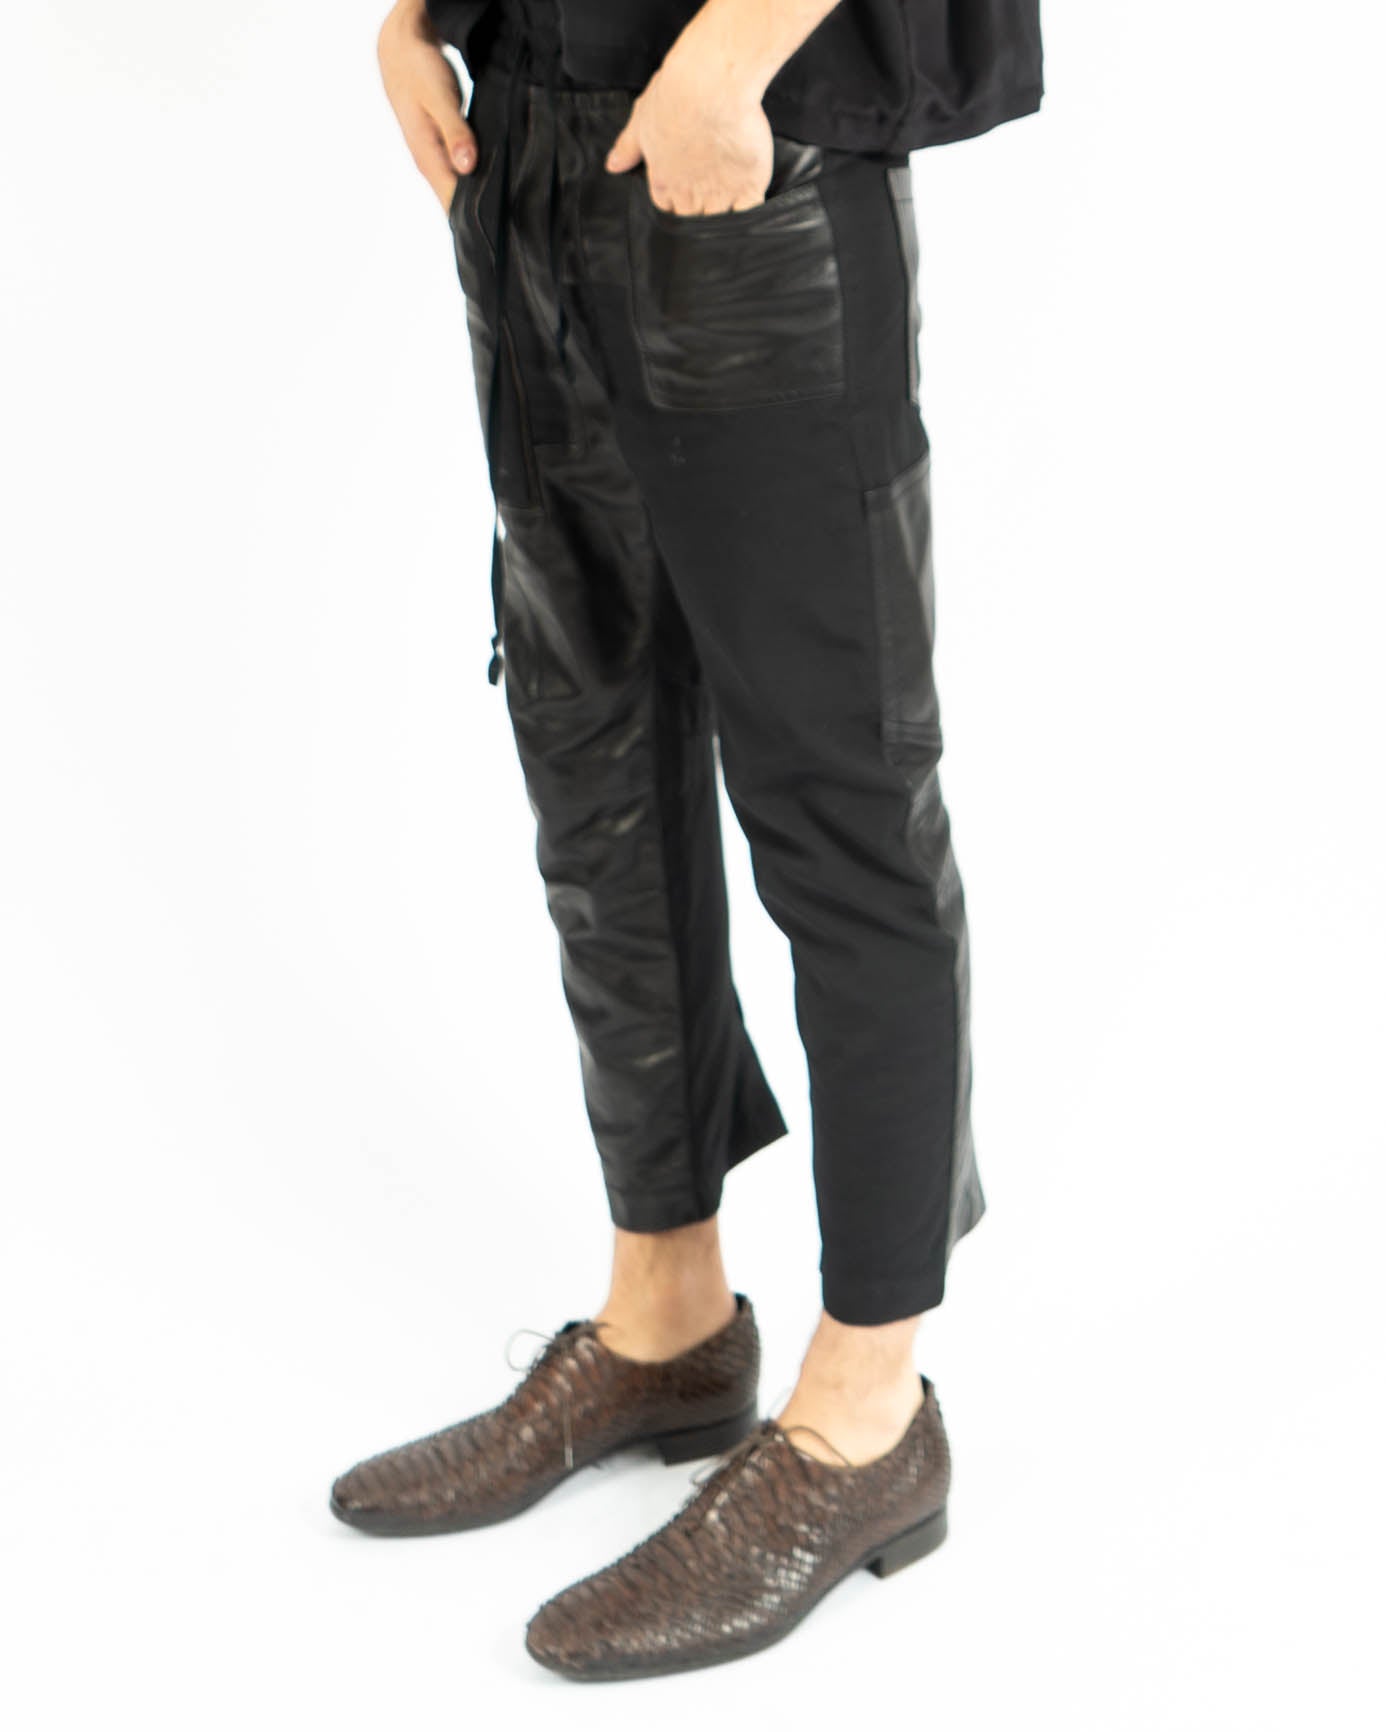 FW17 Leather Patchwork Sweatpants